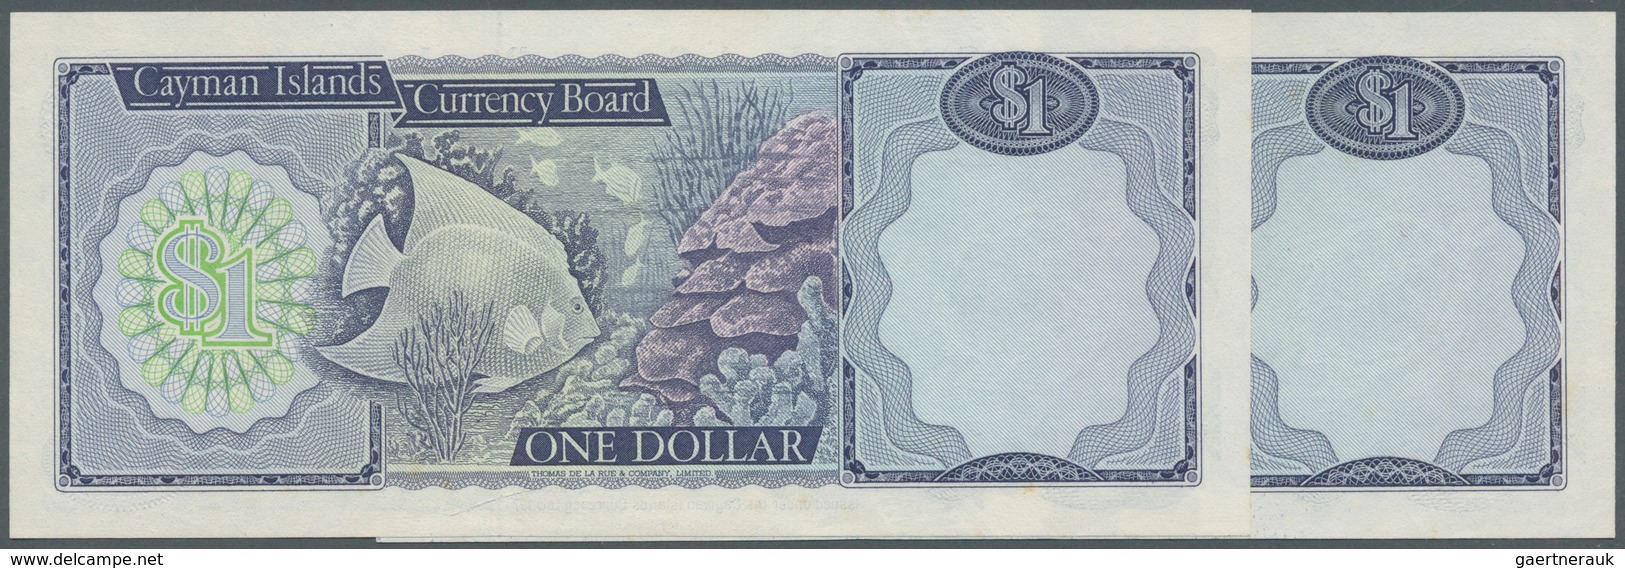 01261 Cayman Islands: Set 2 Pcs CONSECUTIVE 1 Dollar L.1974 P. 5f In Condition: UNC. (2 Pcs) - Kaaimaneilanden